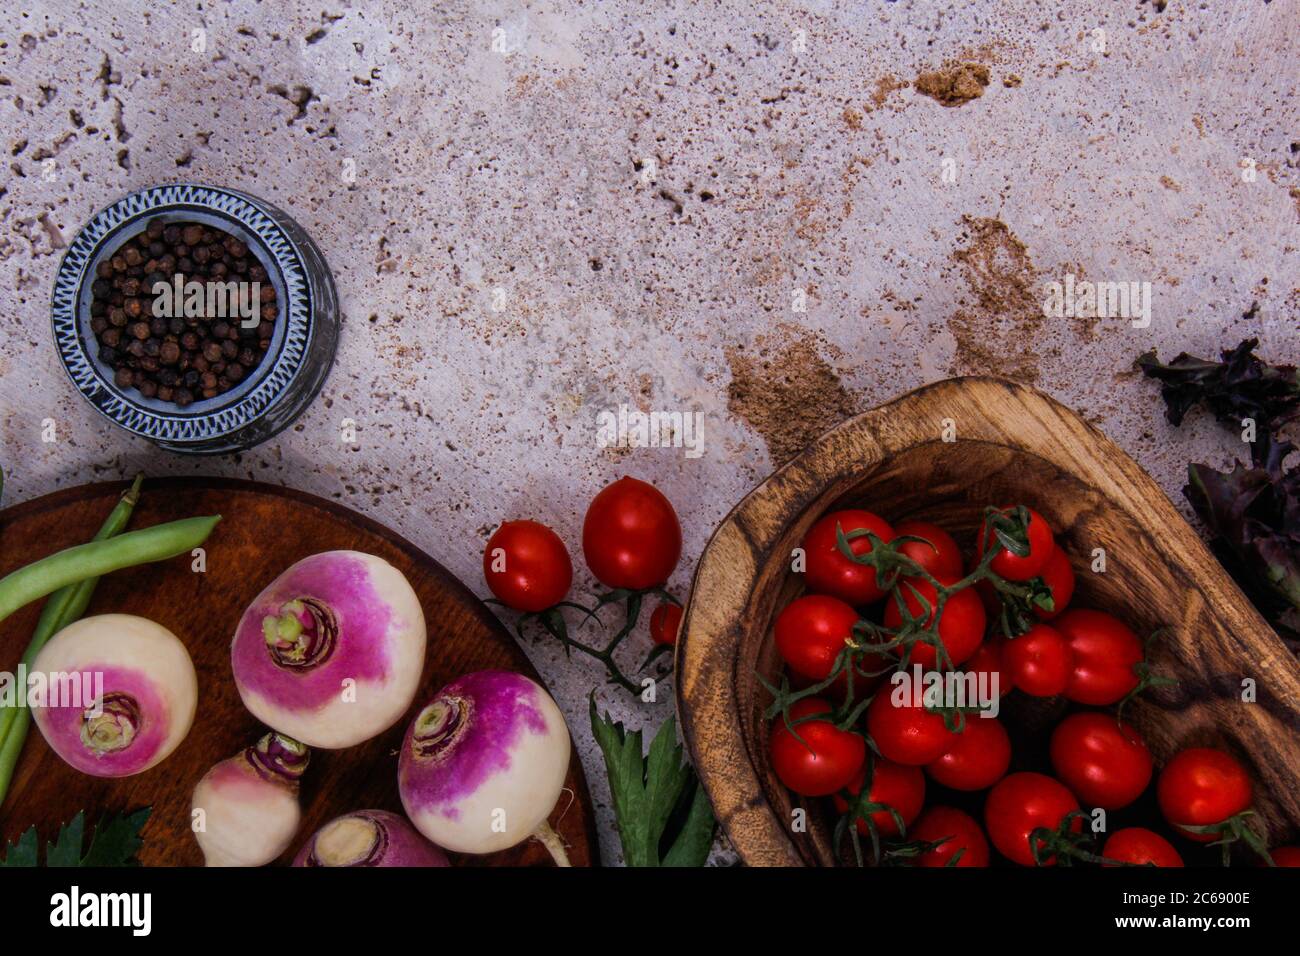 Tomatoes, turnips, parsley and black pepper. Stock Photo